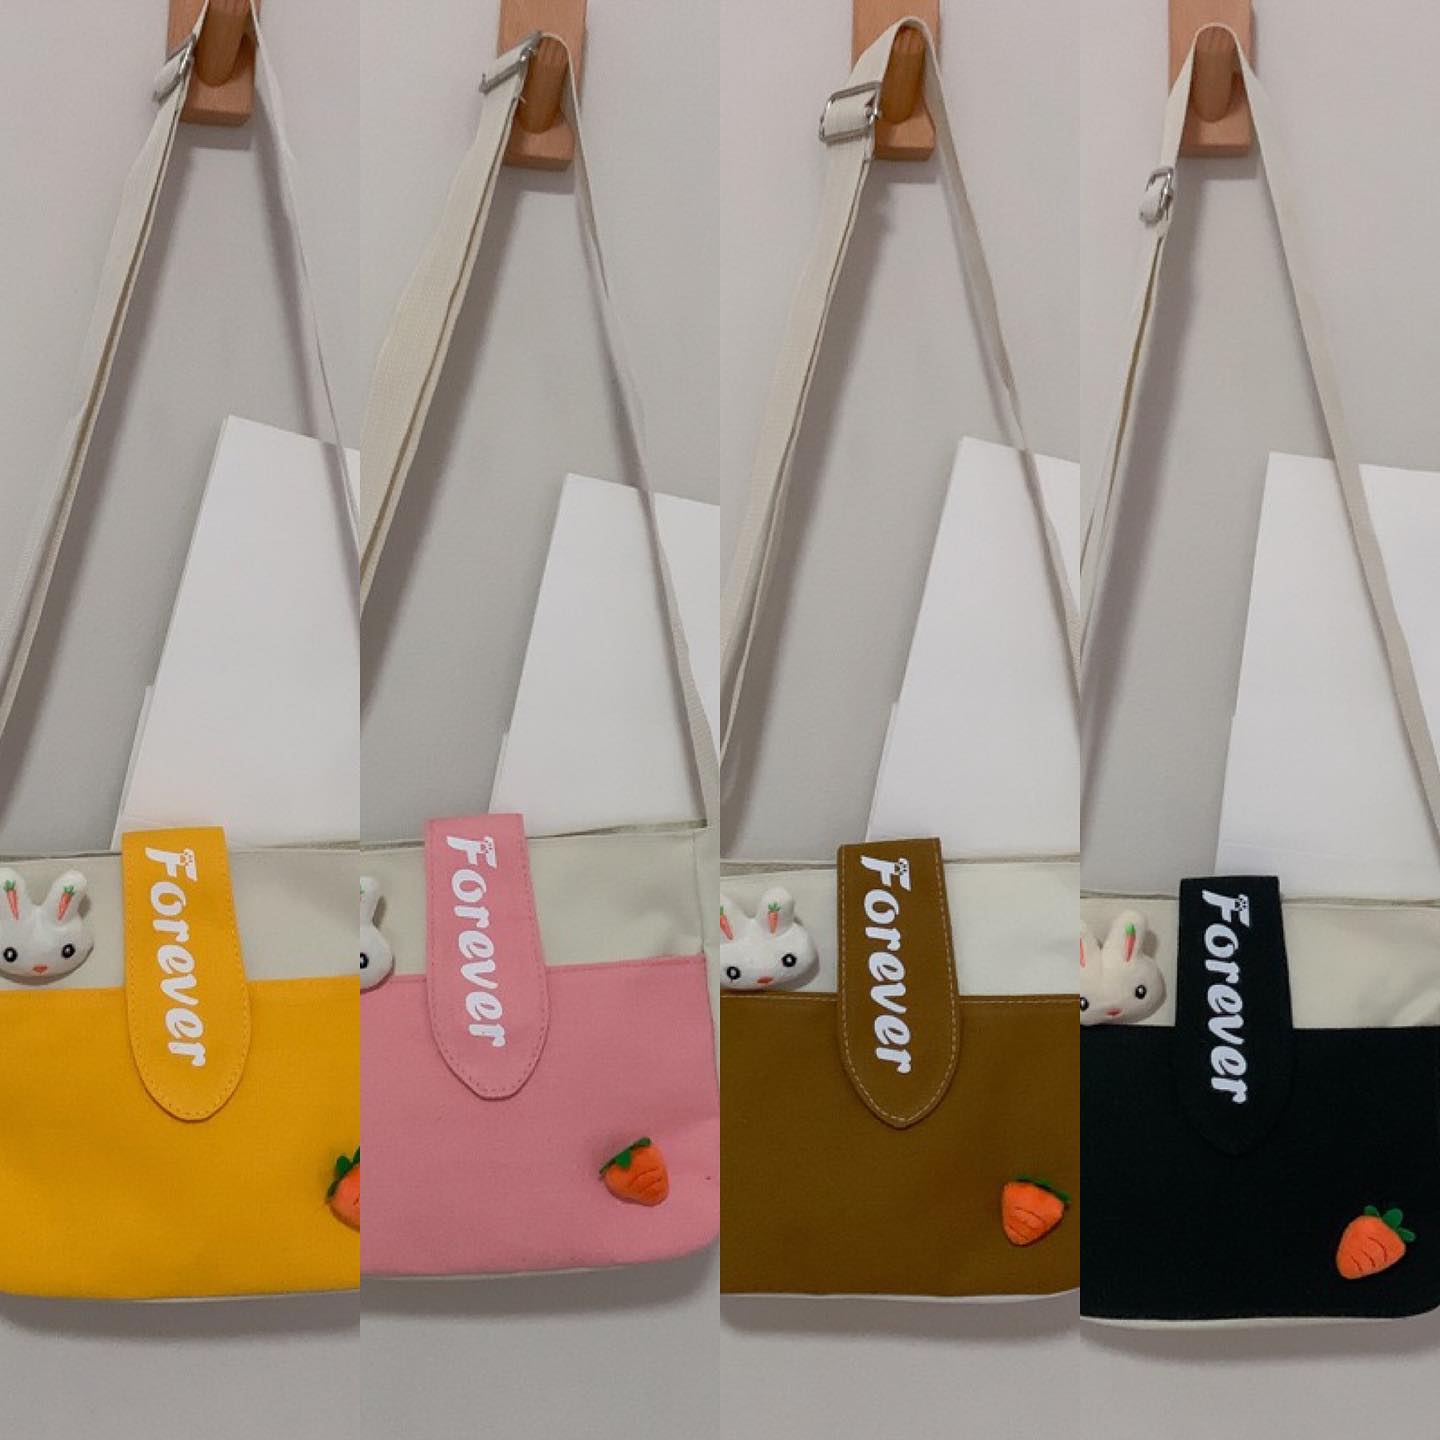 m047 korean design canvas bag with candy colors contrast colors